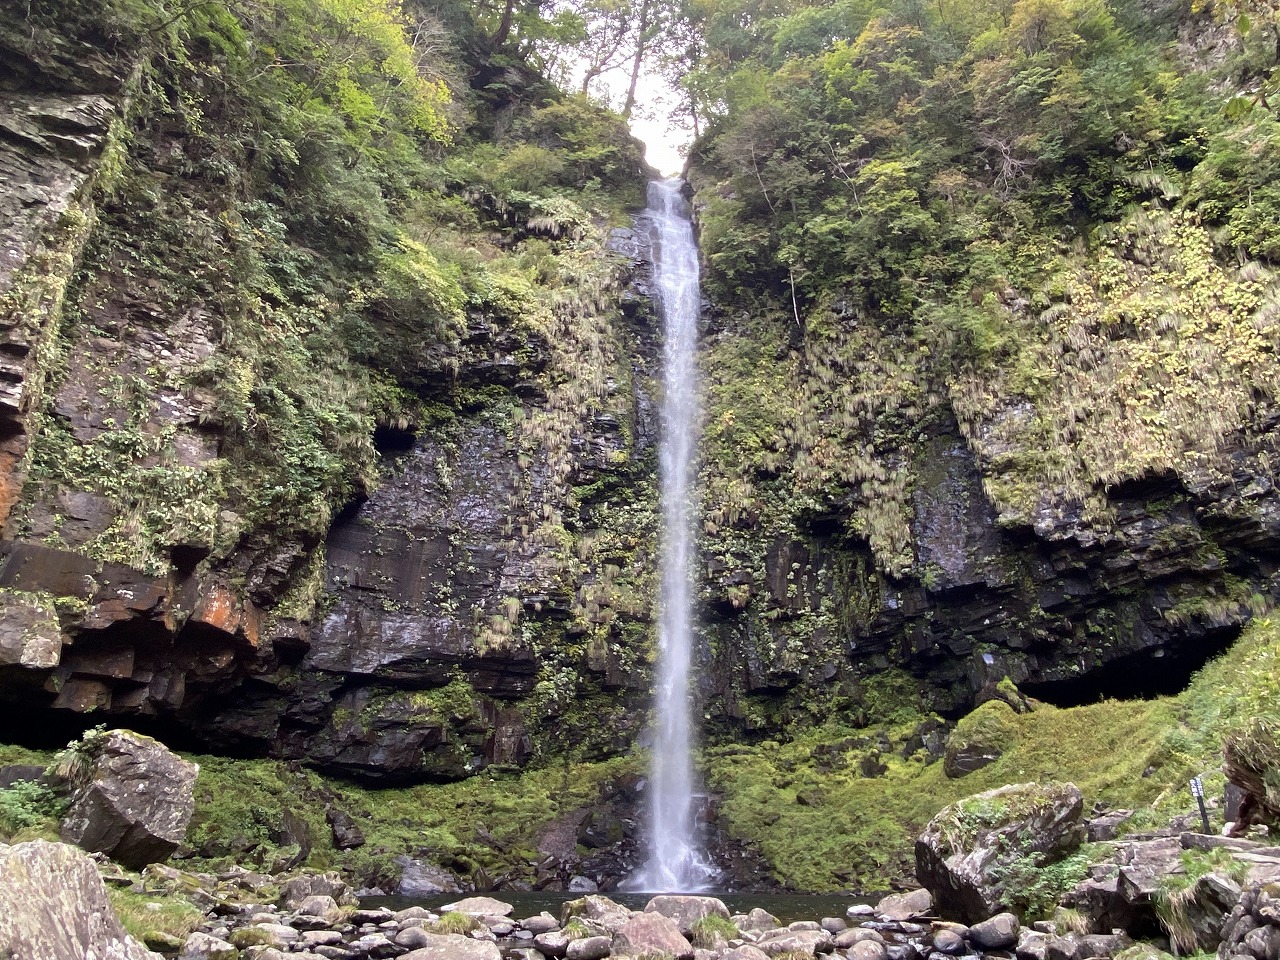 Mt. Hakusan Spirituality and Nature Walking Tour